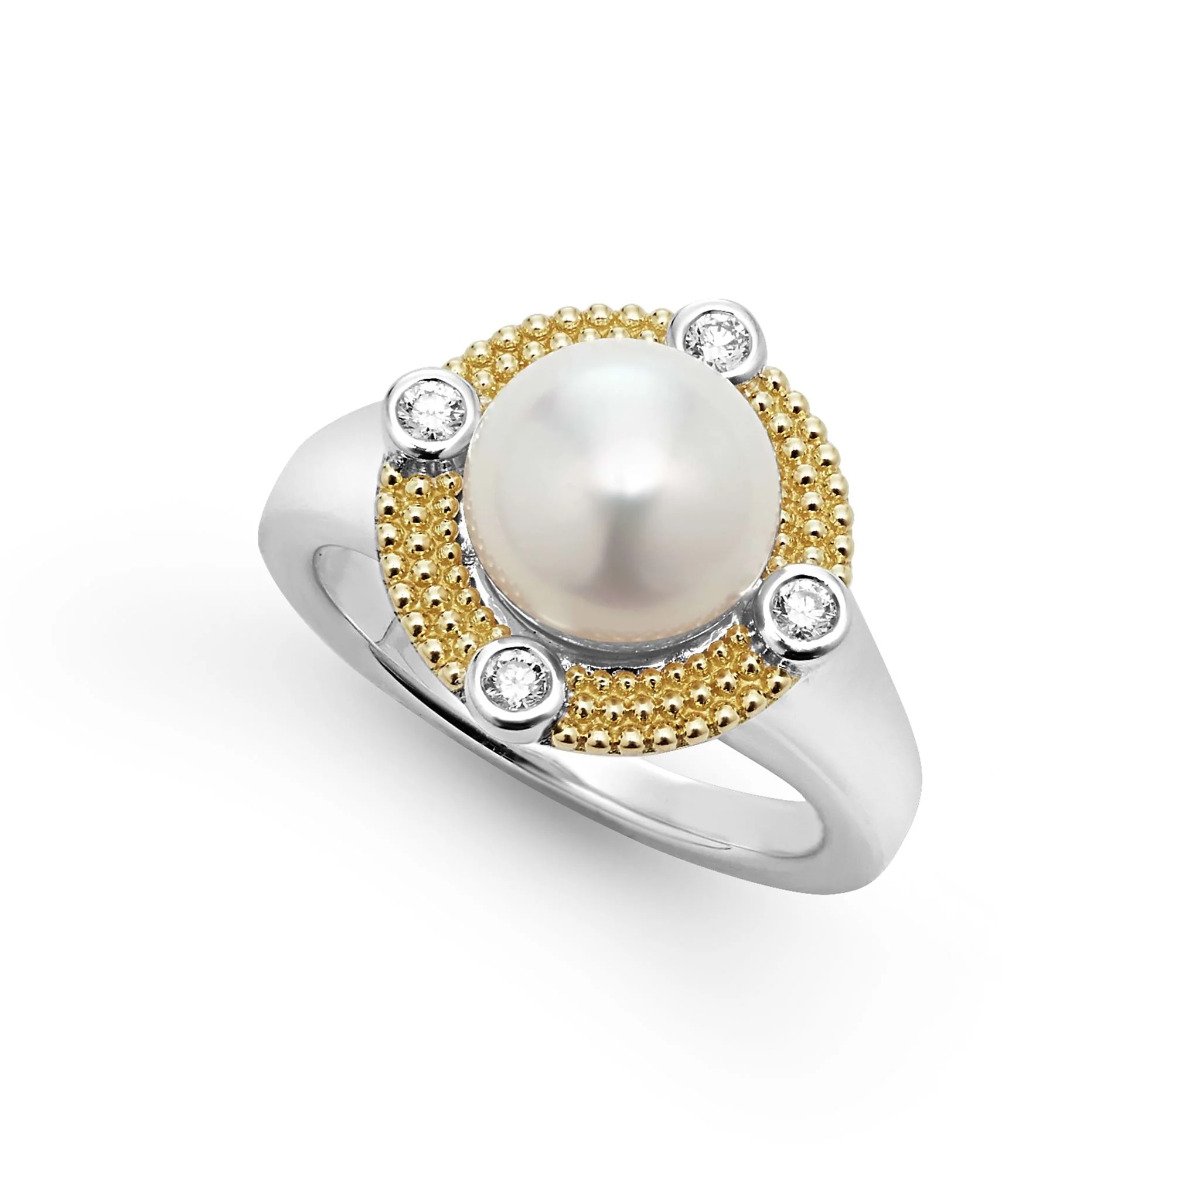 LAGOS "Luna" Pearl Diamond Ring